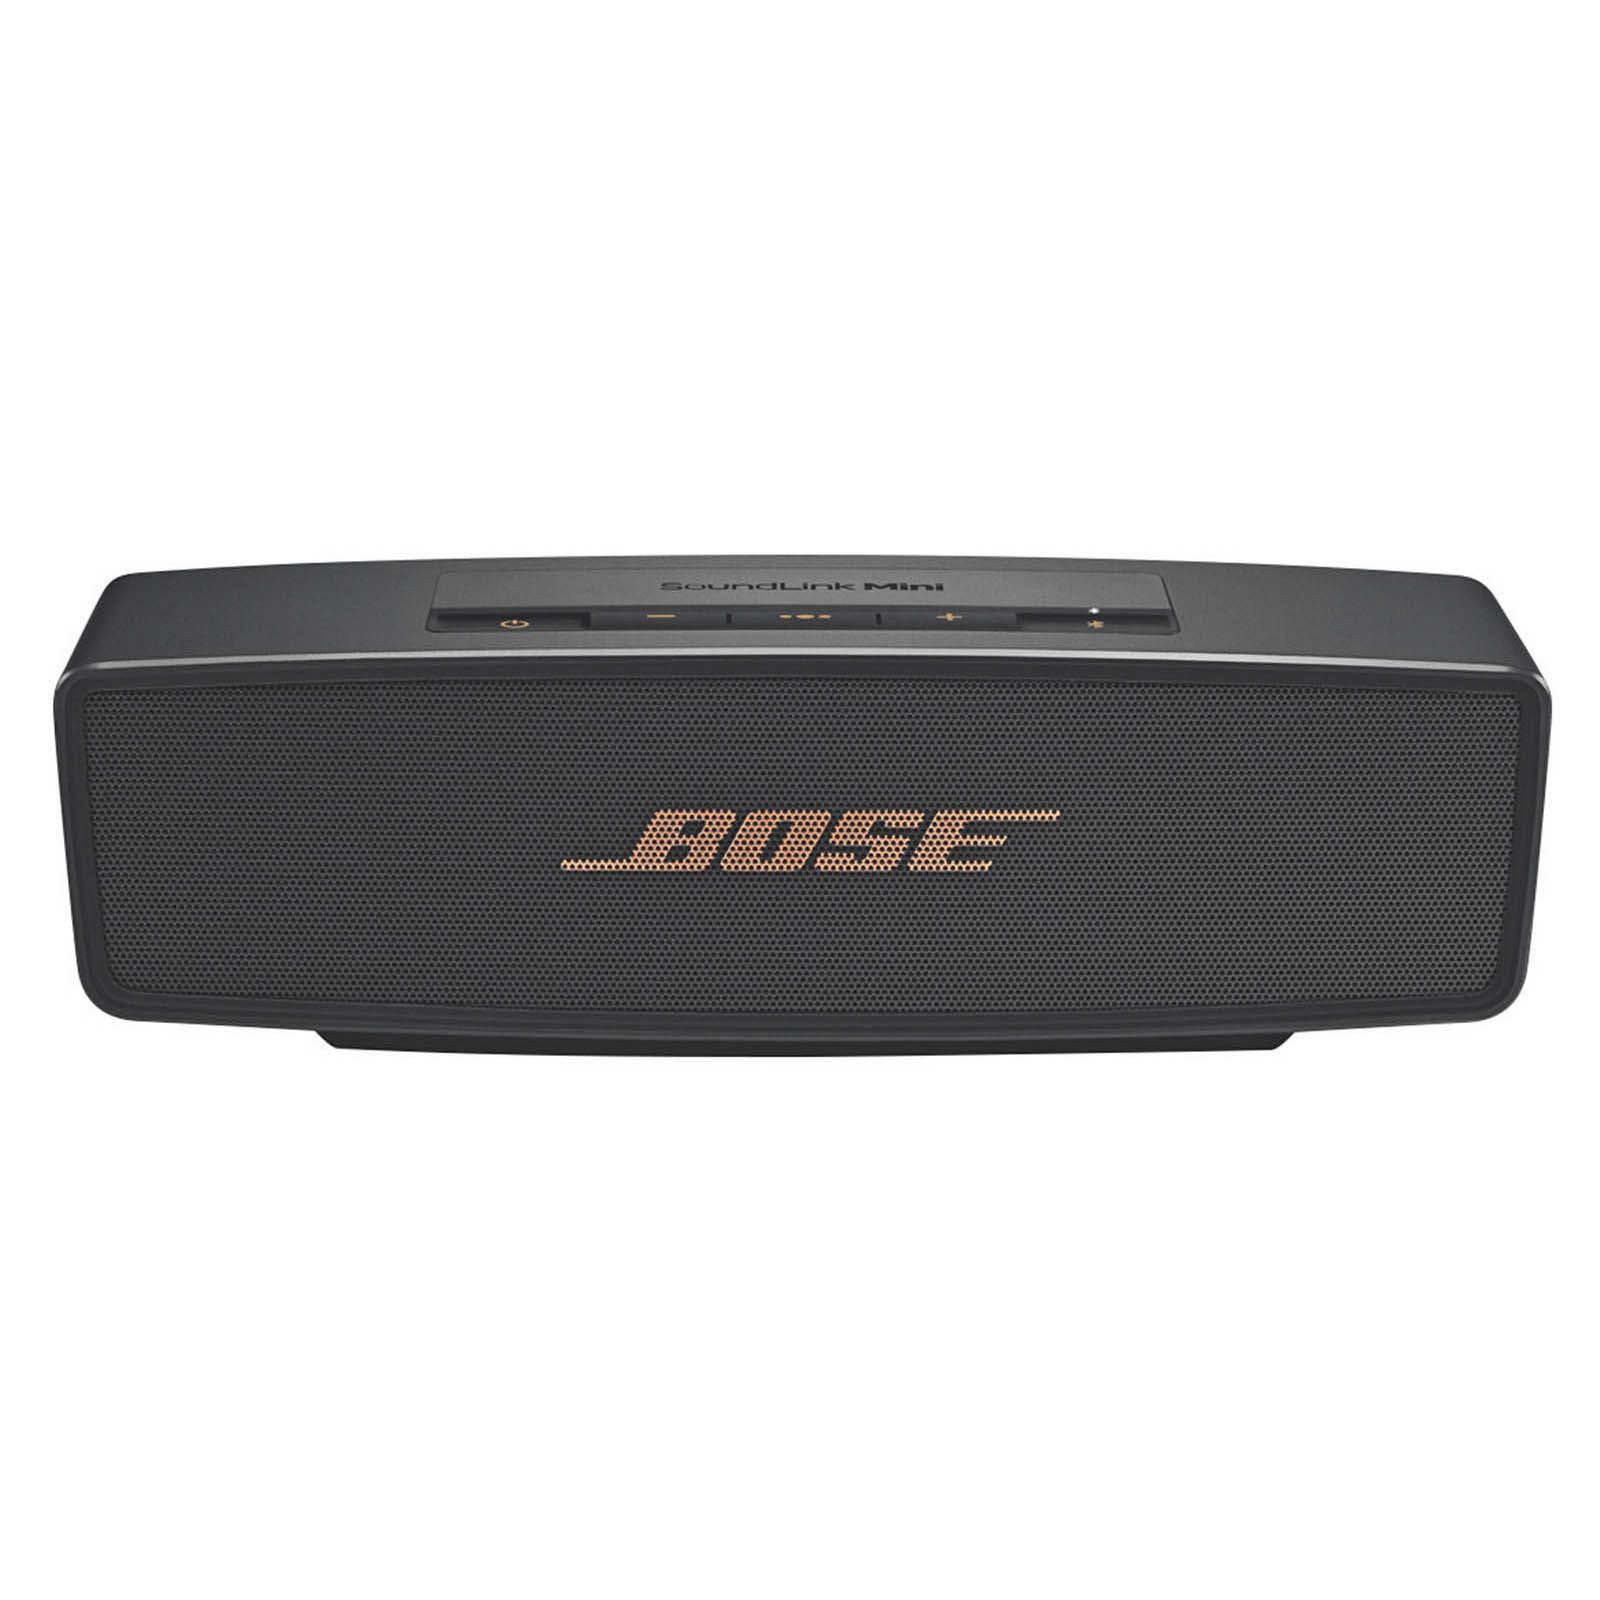 Bose SoundLink Mini II bluetooth